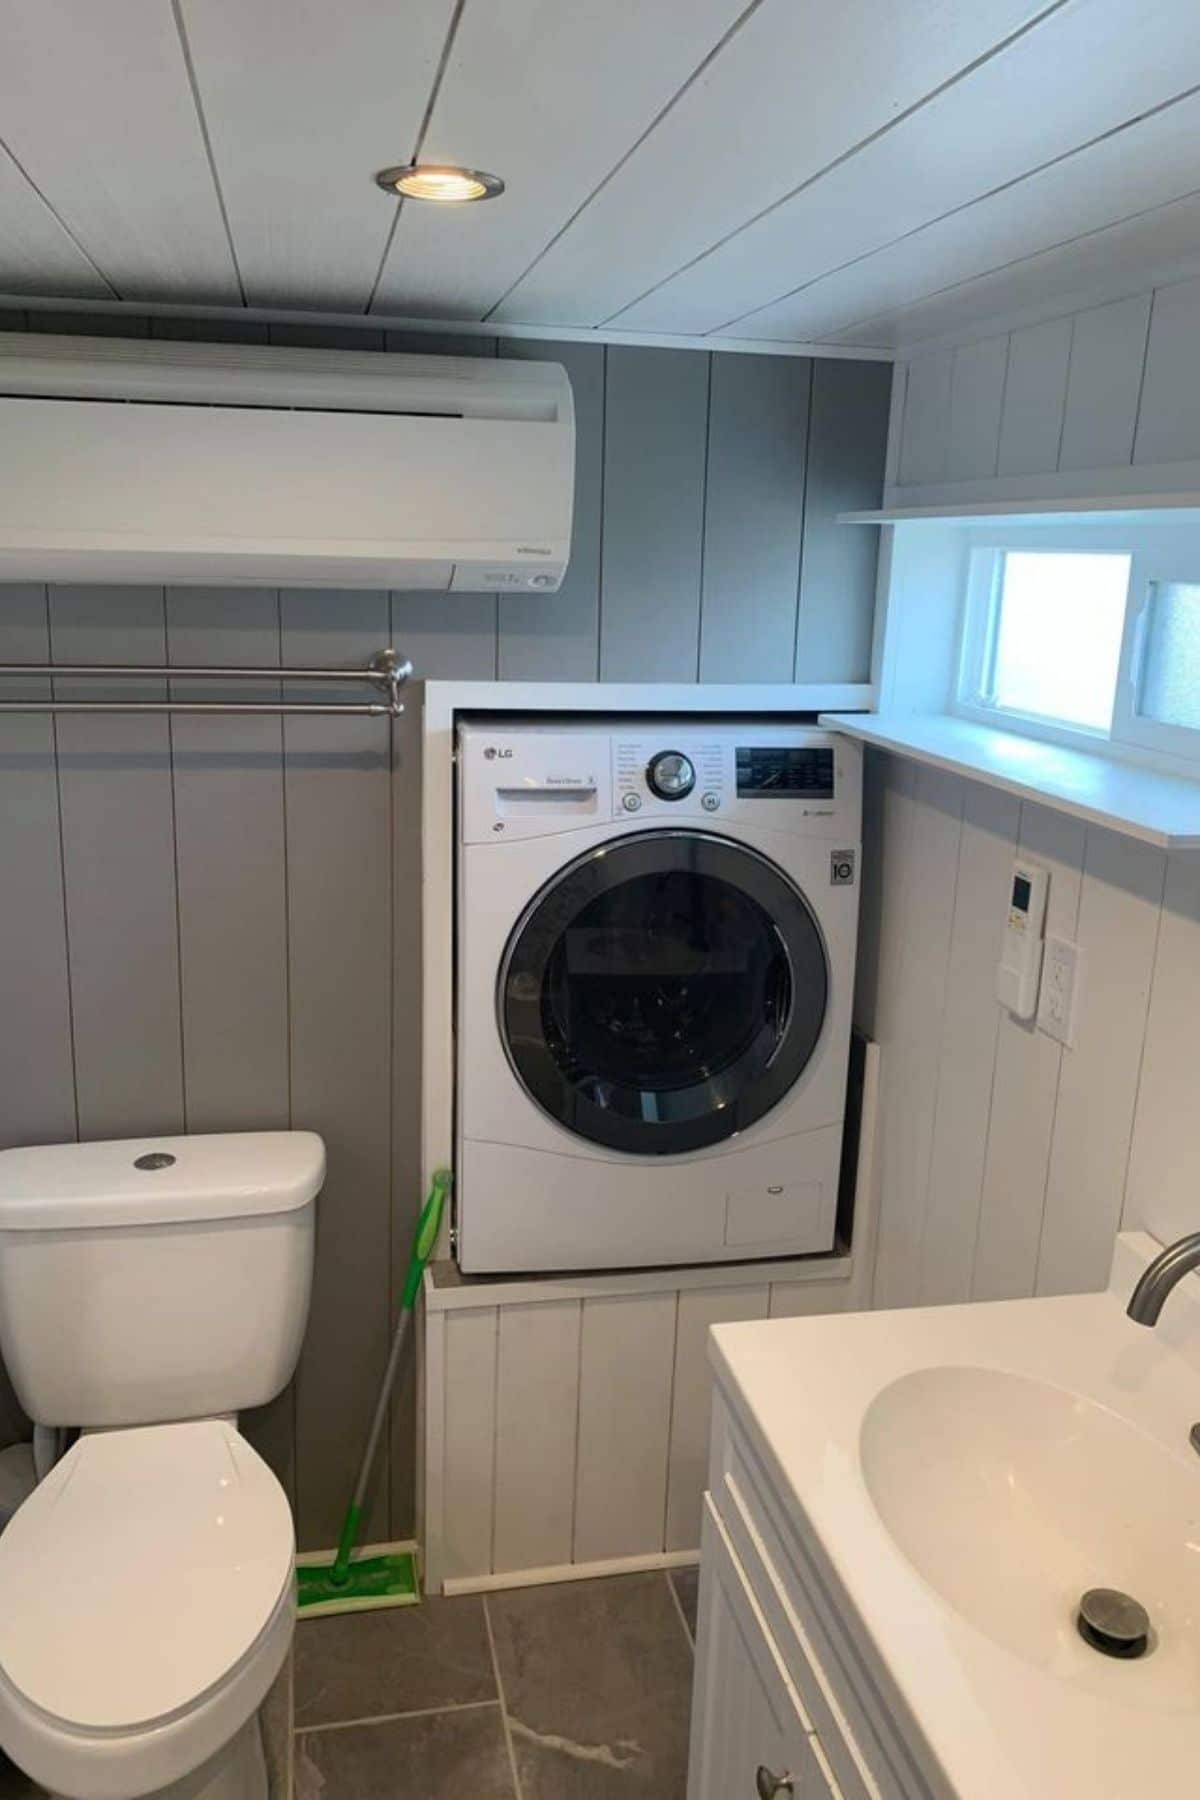 Combination washing machine mounted into white walli n bathroom with gray shiplap